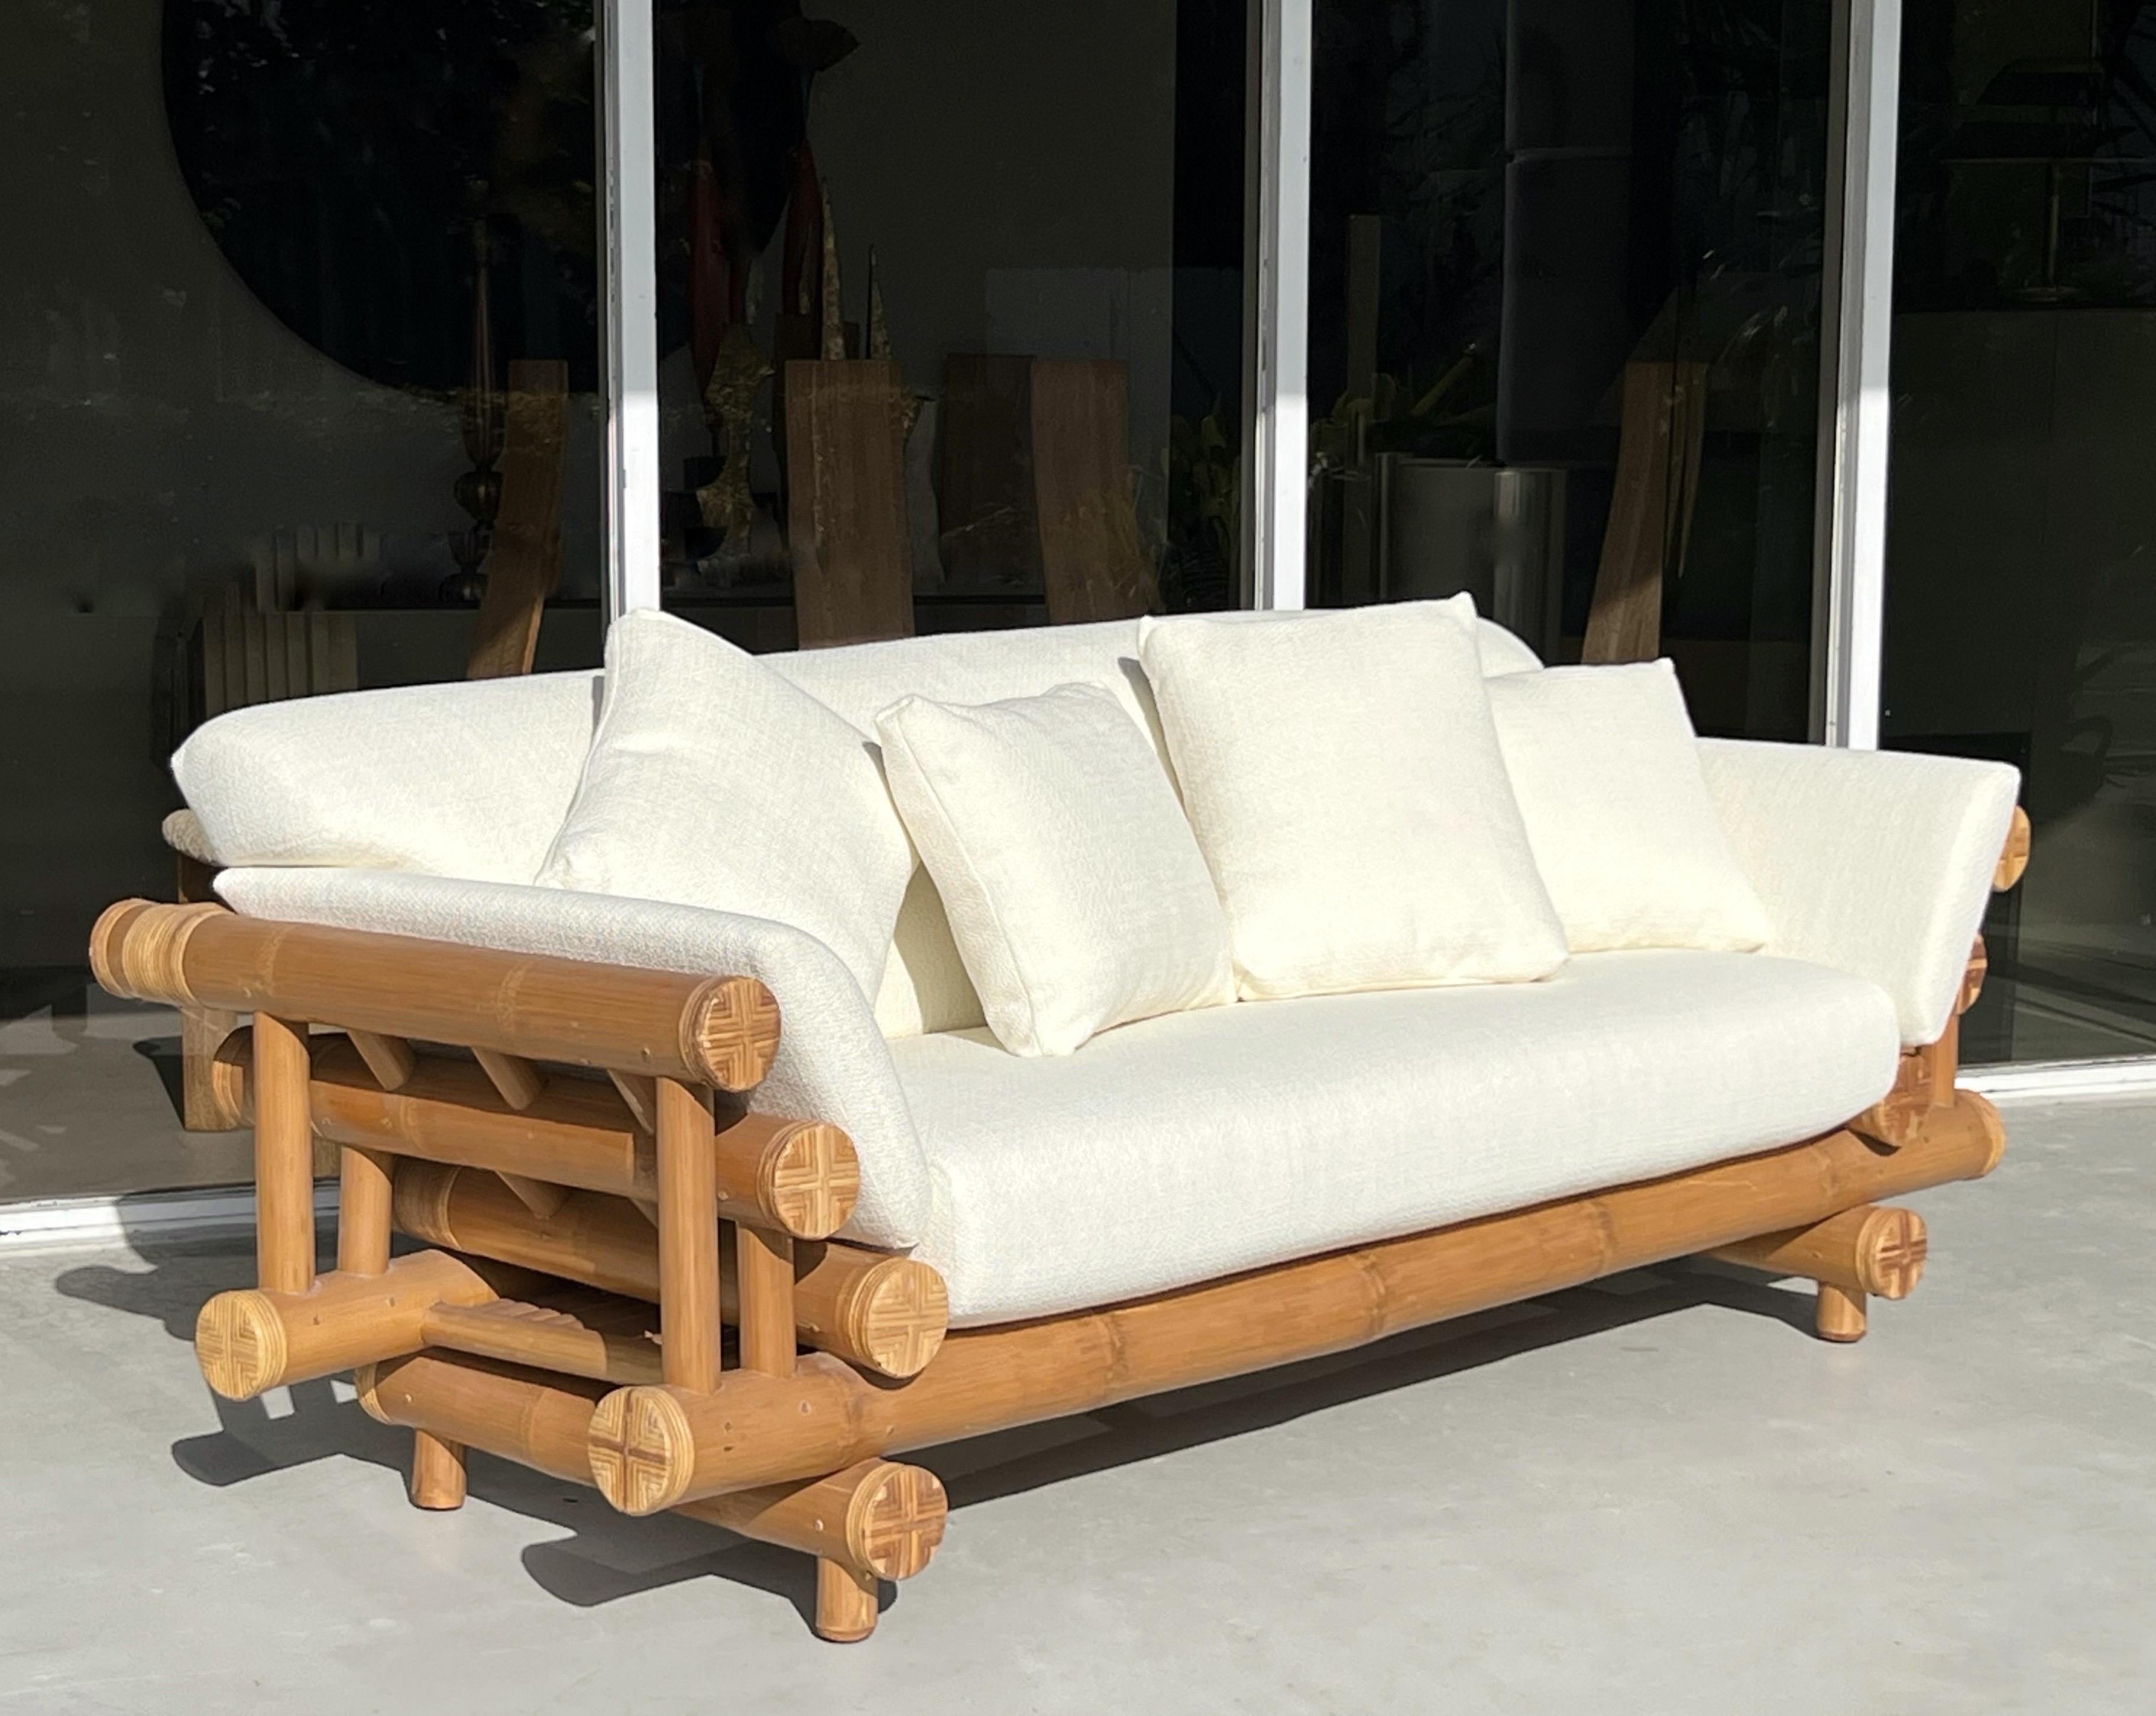 Sculptural Bamboo Rattan Sofa 1970s In Good Condition For Sale In Miami, FL